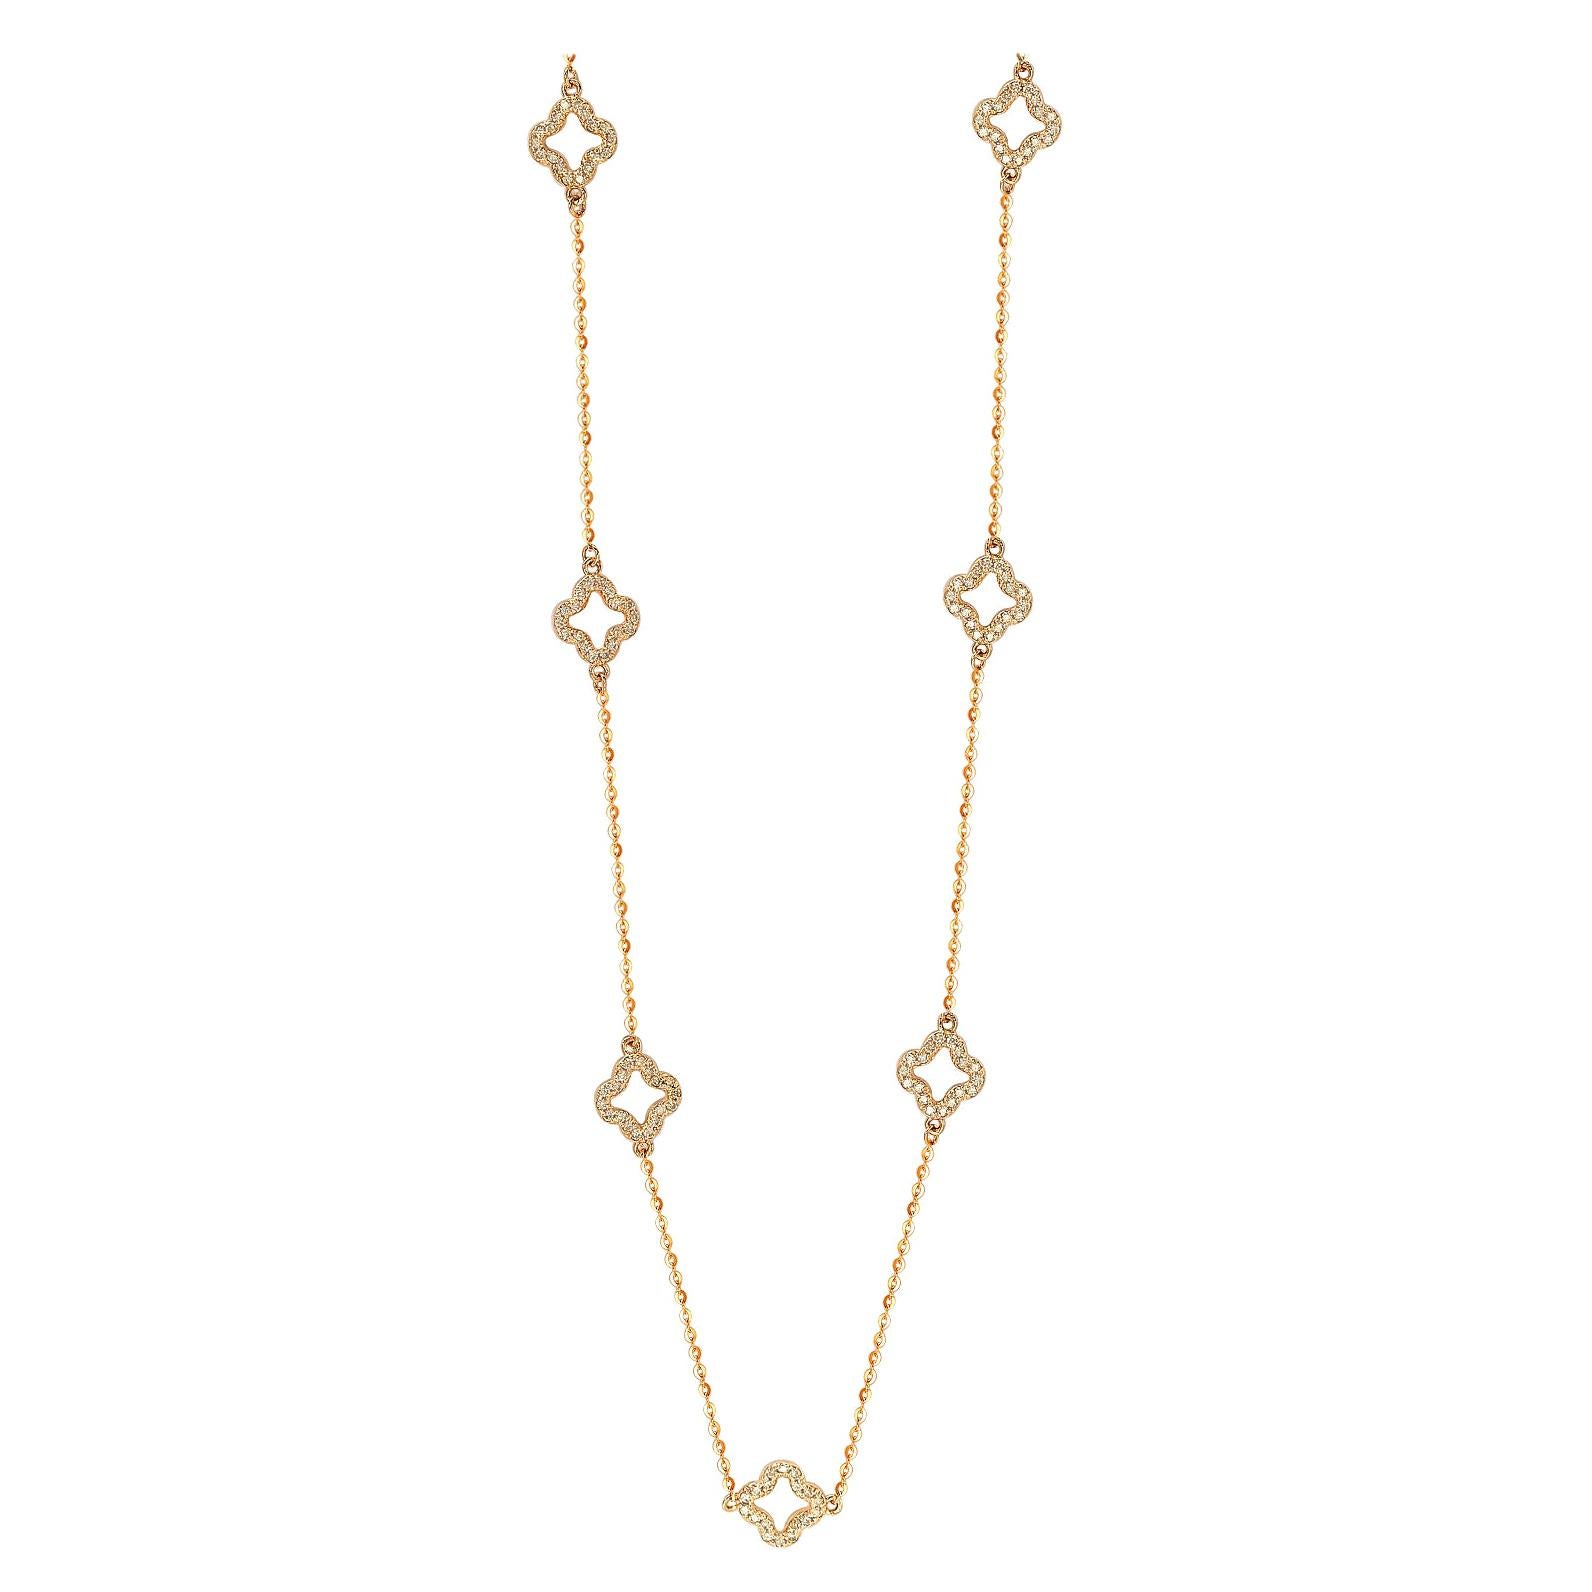 Suzy Levian 14k Halskette, 14k Roségold, weißer Diamant, 7 Kleeblatt pro Meter